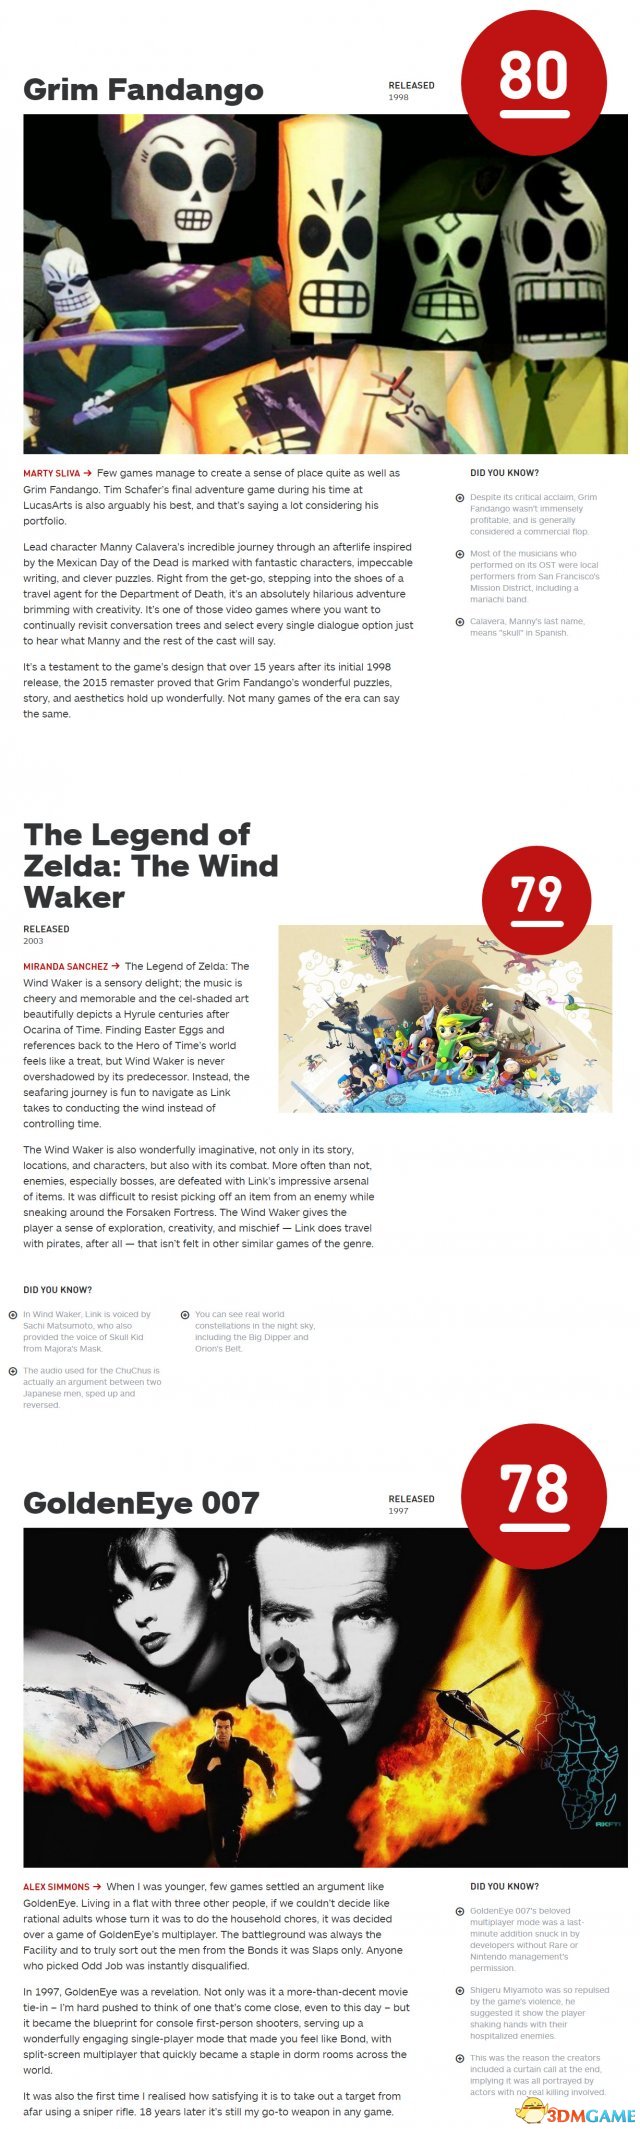 IGN評選TOP100遊戲 《DOTA2》排名遠超《LOL》